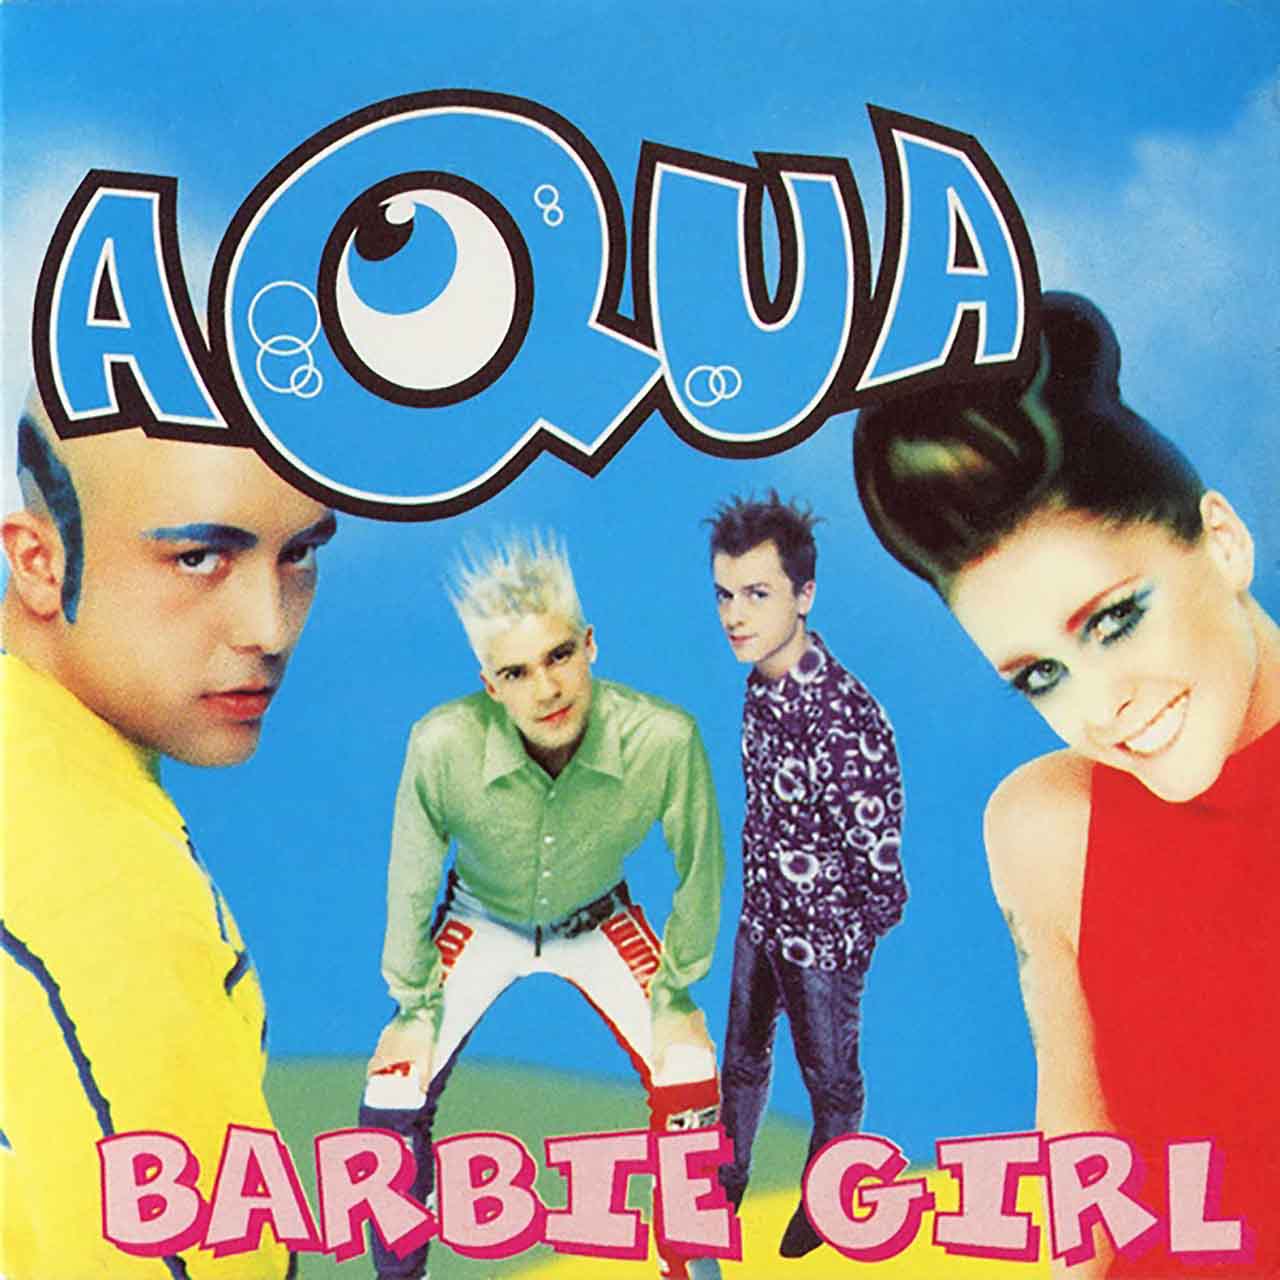 Barbie Girl': Aqua's Joyous, Meaningful Anthem Still Resonates